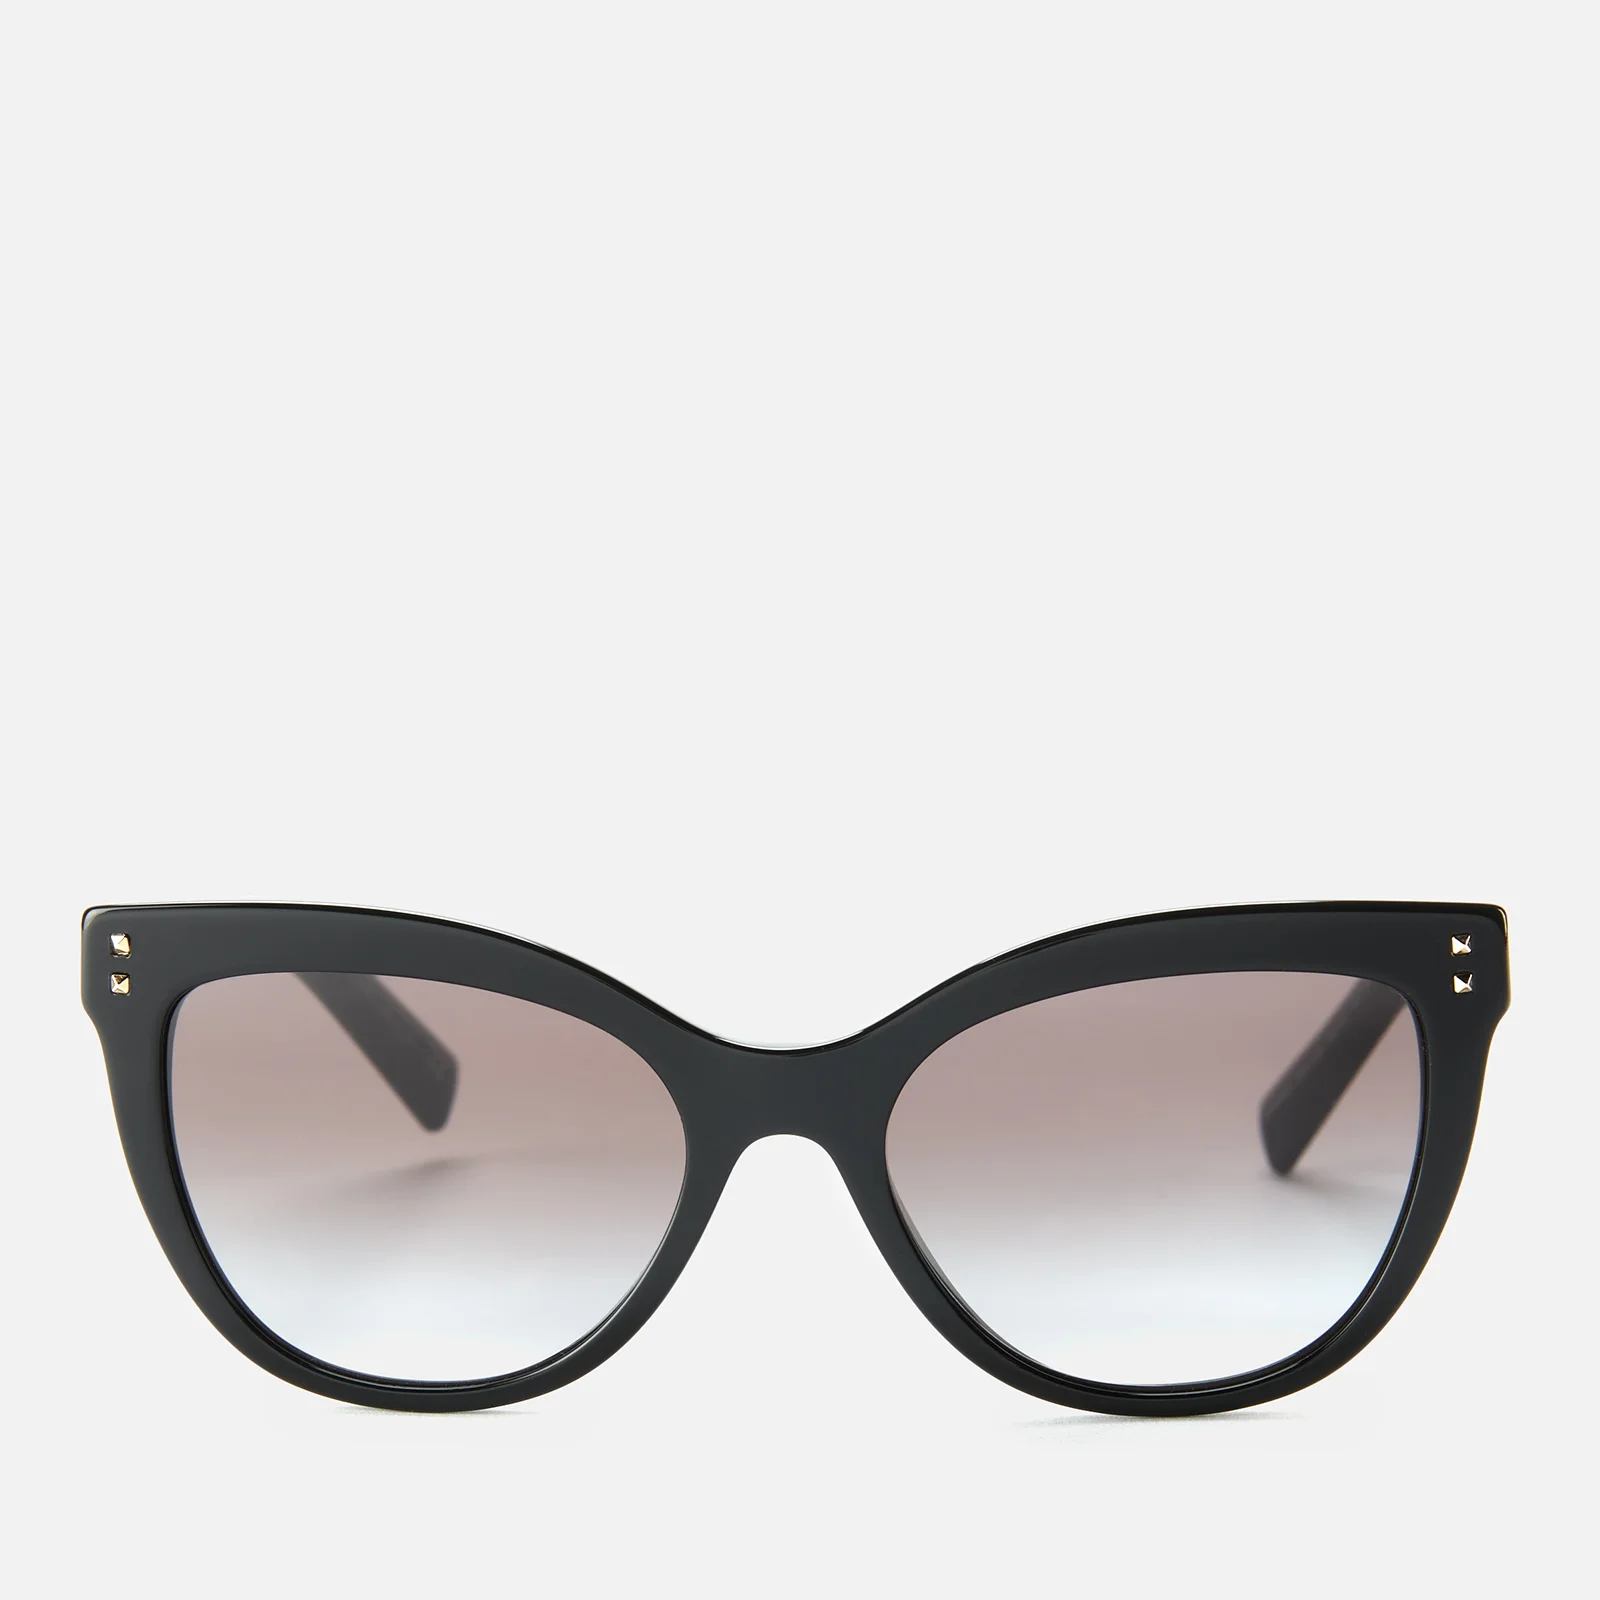 Valentino Women's Allure Acetate Stud Sunglasses - Black Image 1